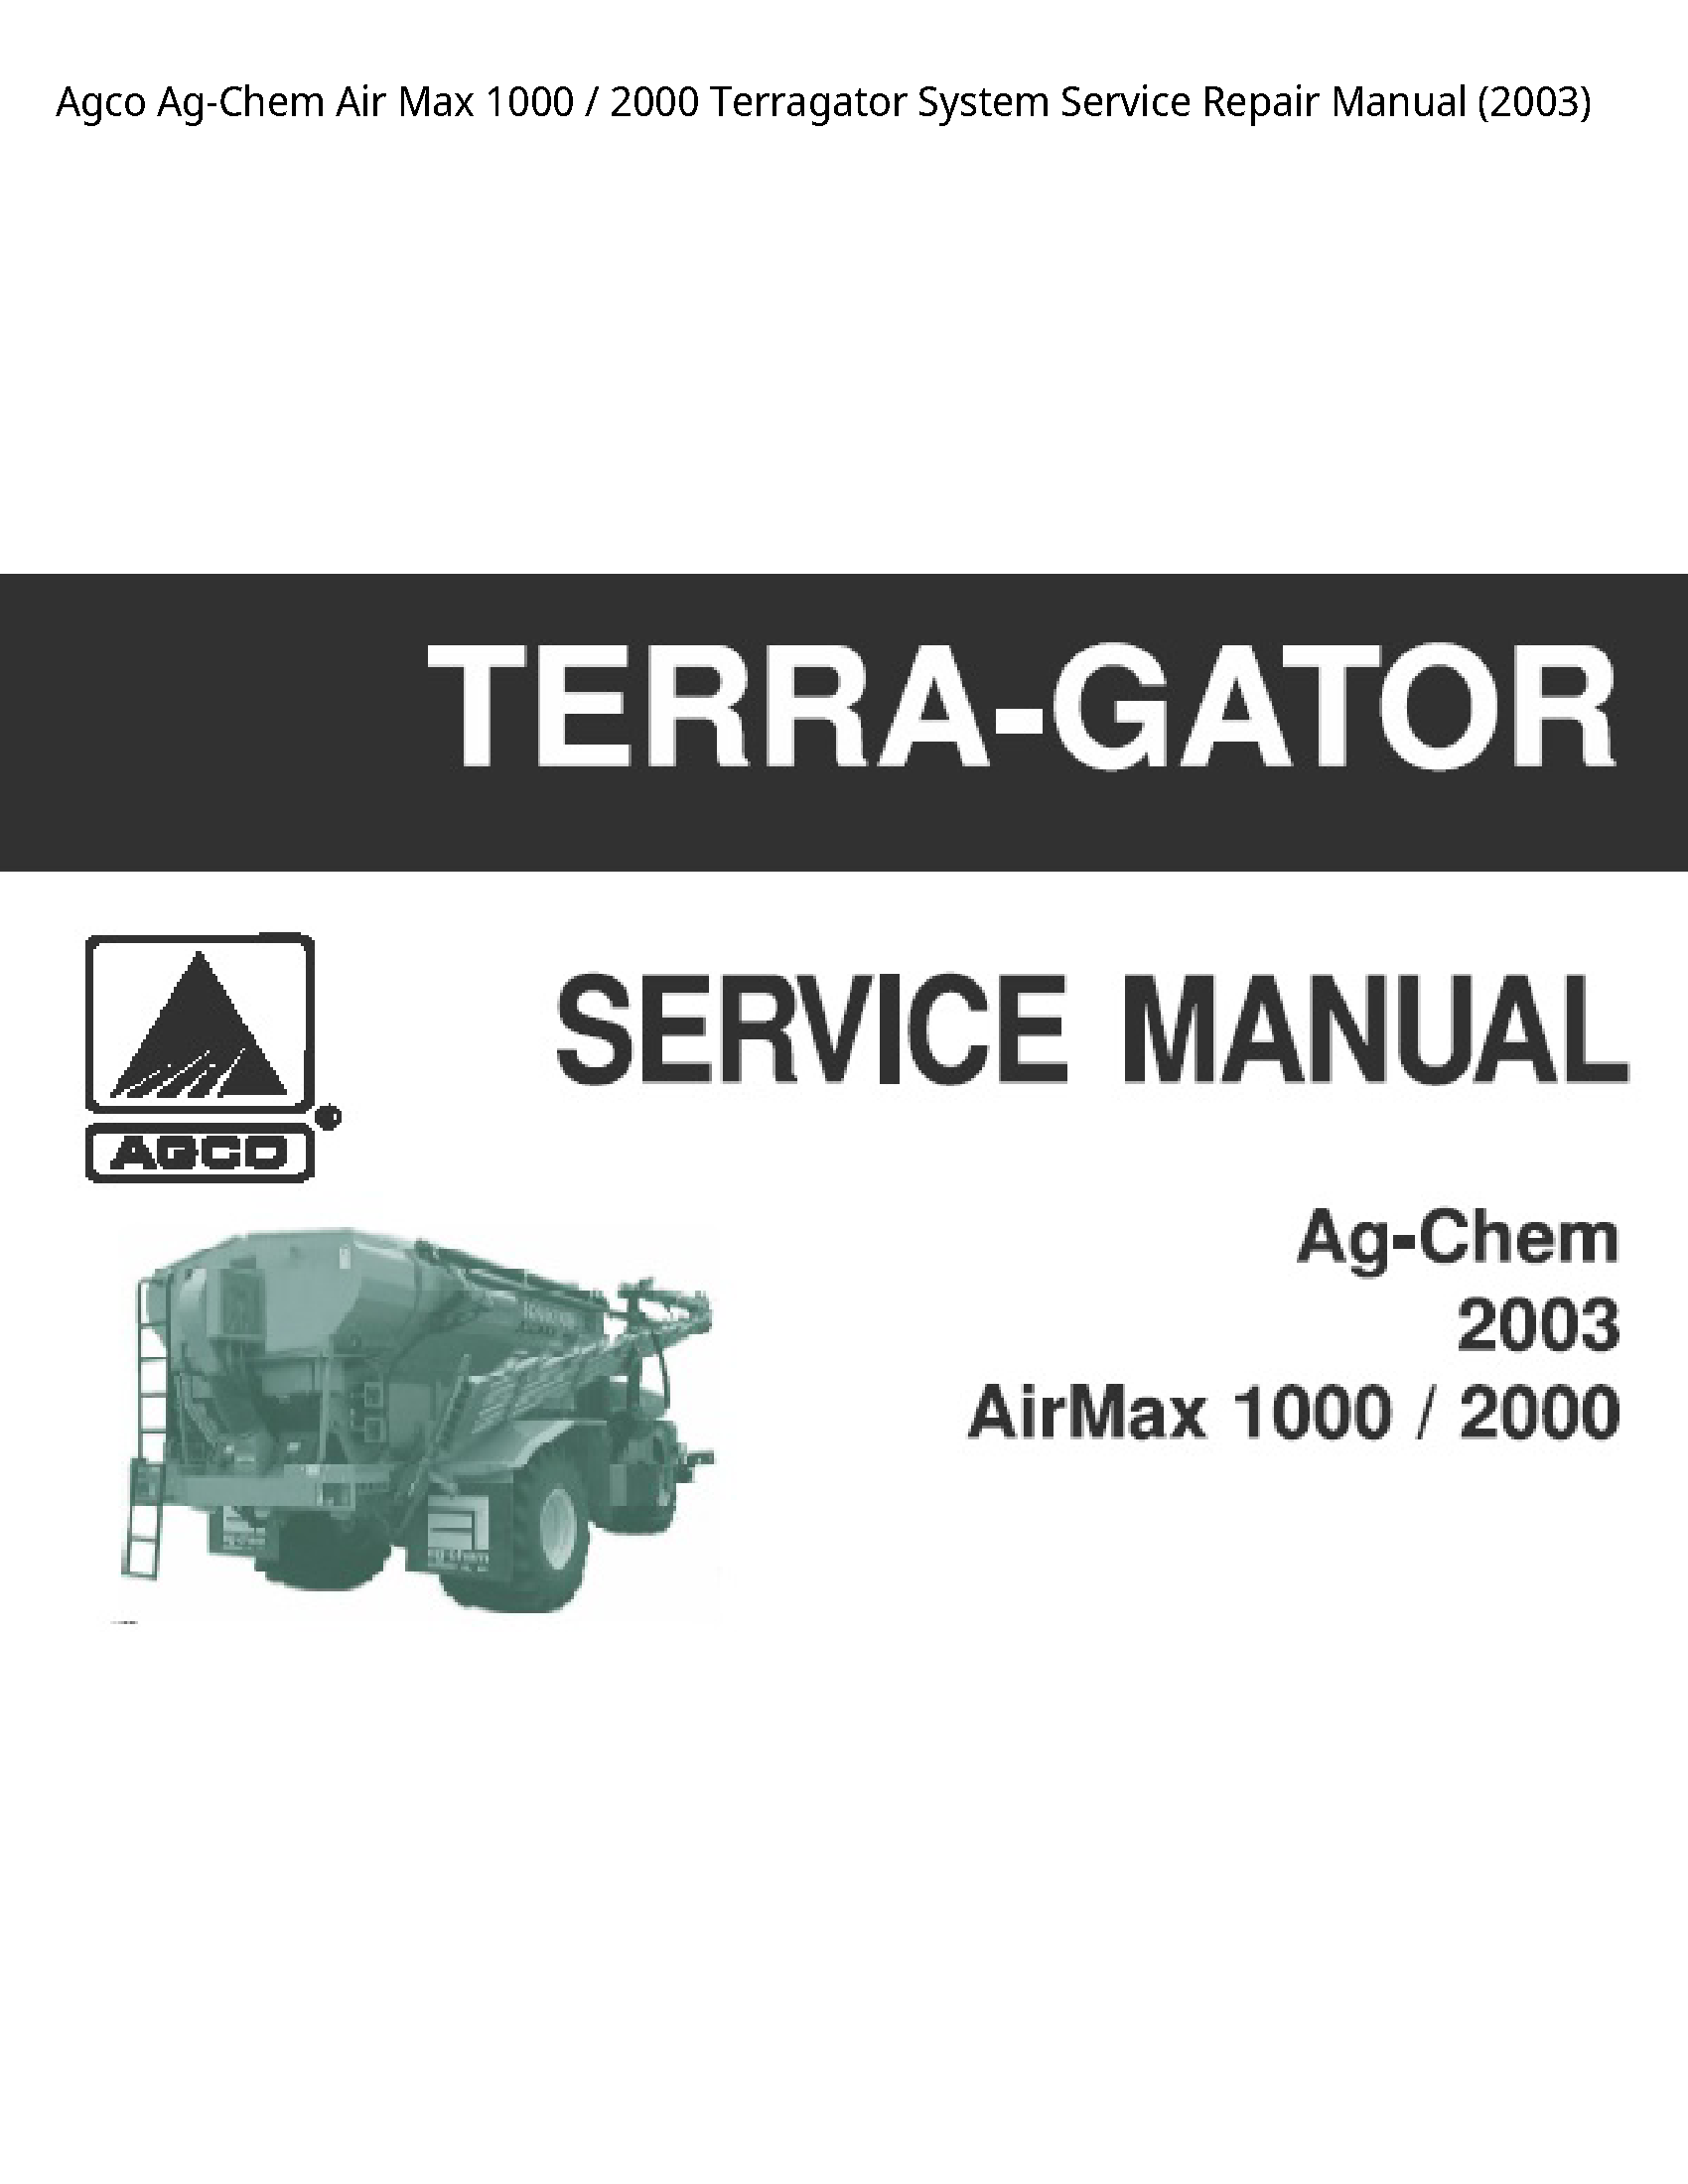 AGCO 1000 Ag-Chem Air Max Terragator System manual